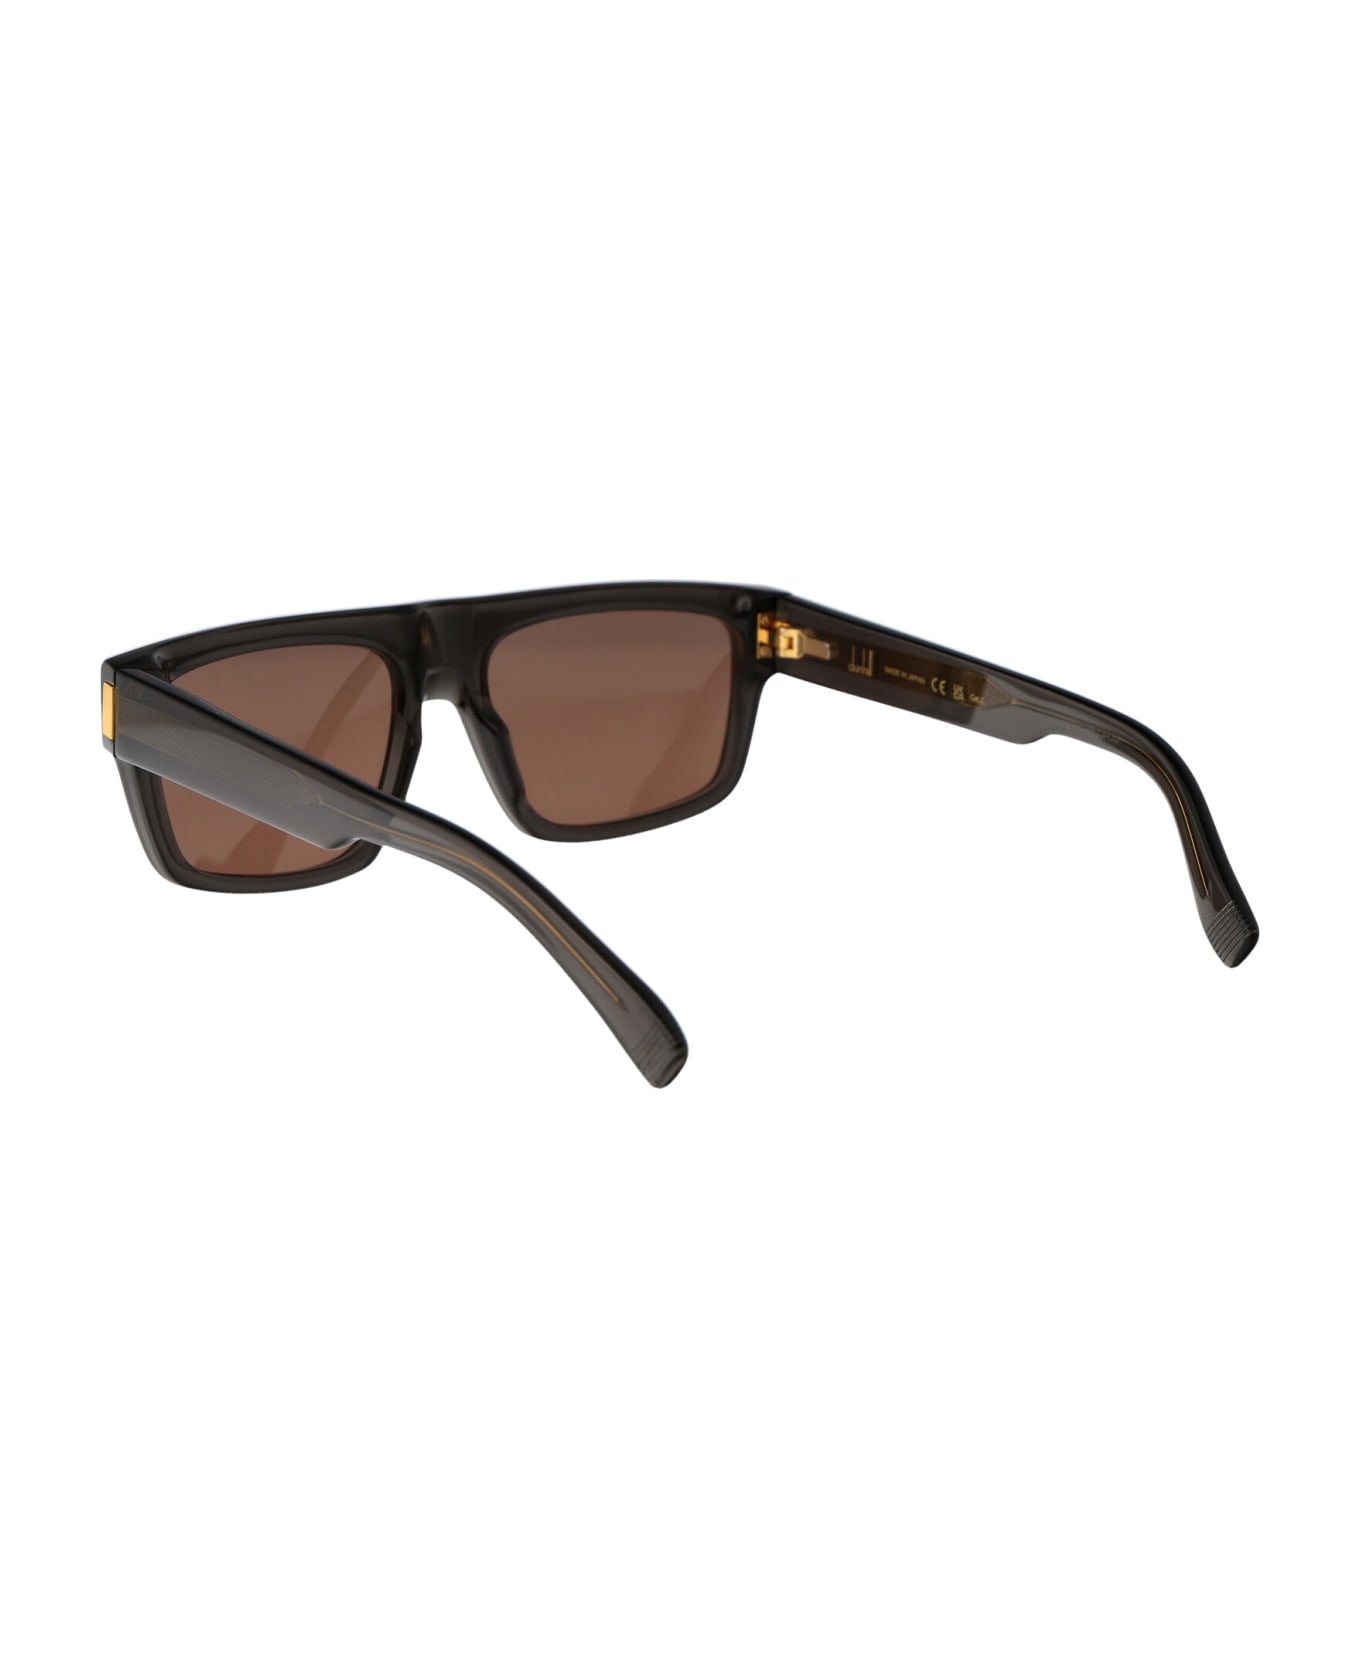 Dunhill Du0055s Sunglasses - 004 Eyewear GG1001SK Sunglasses